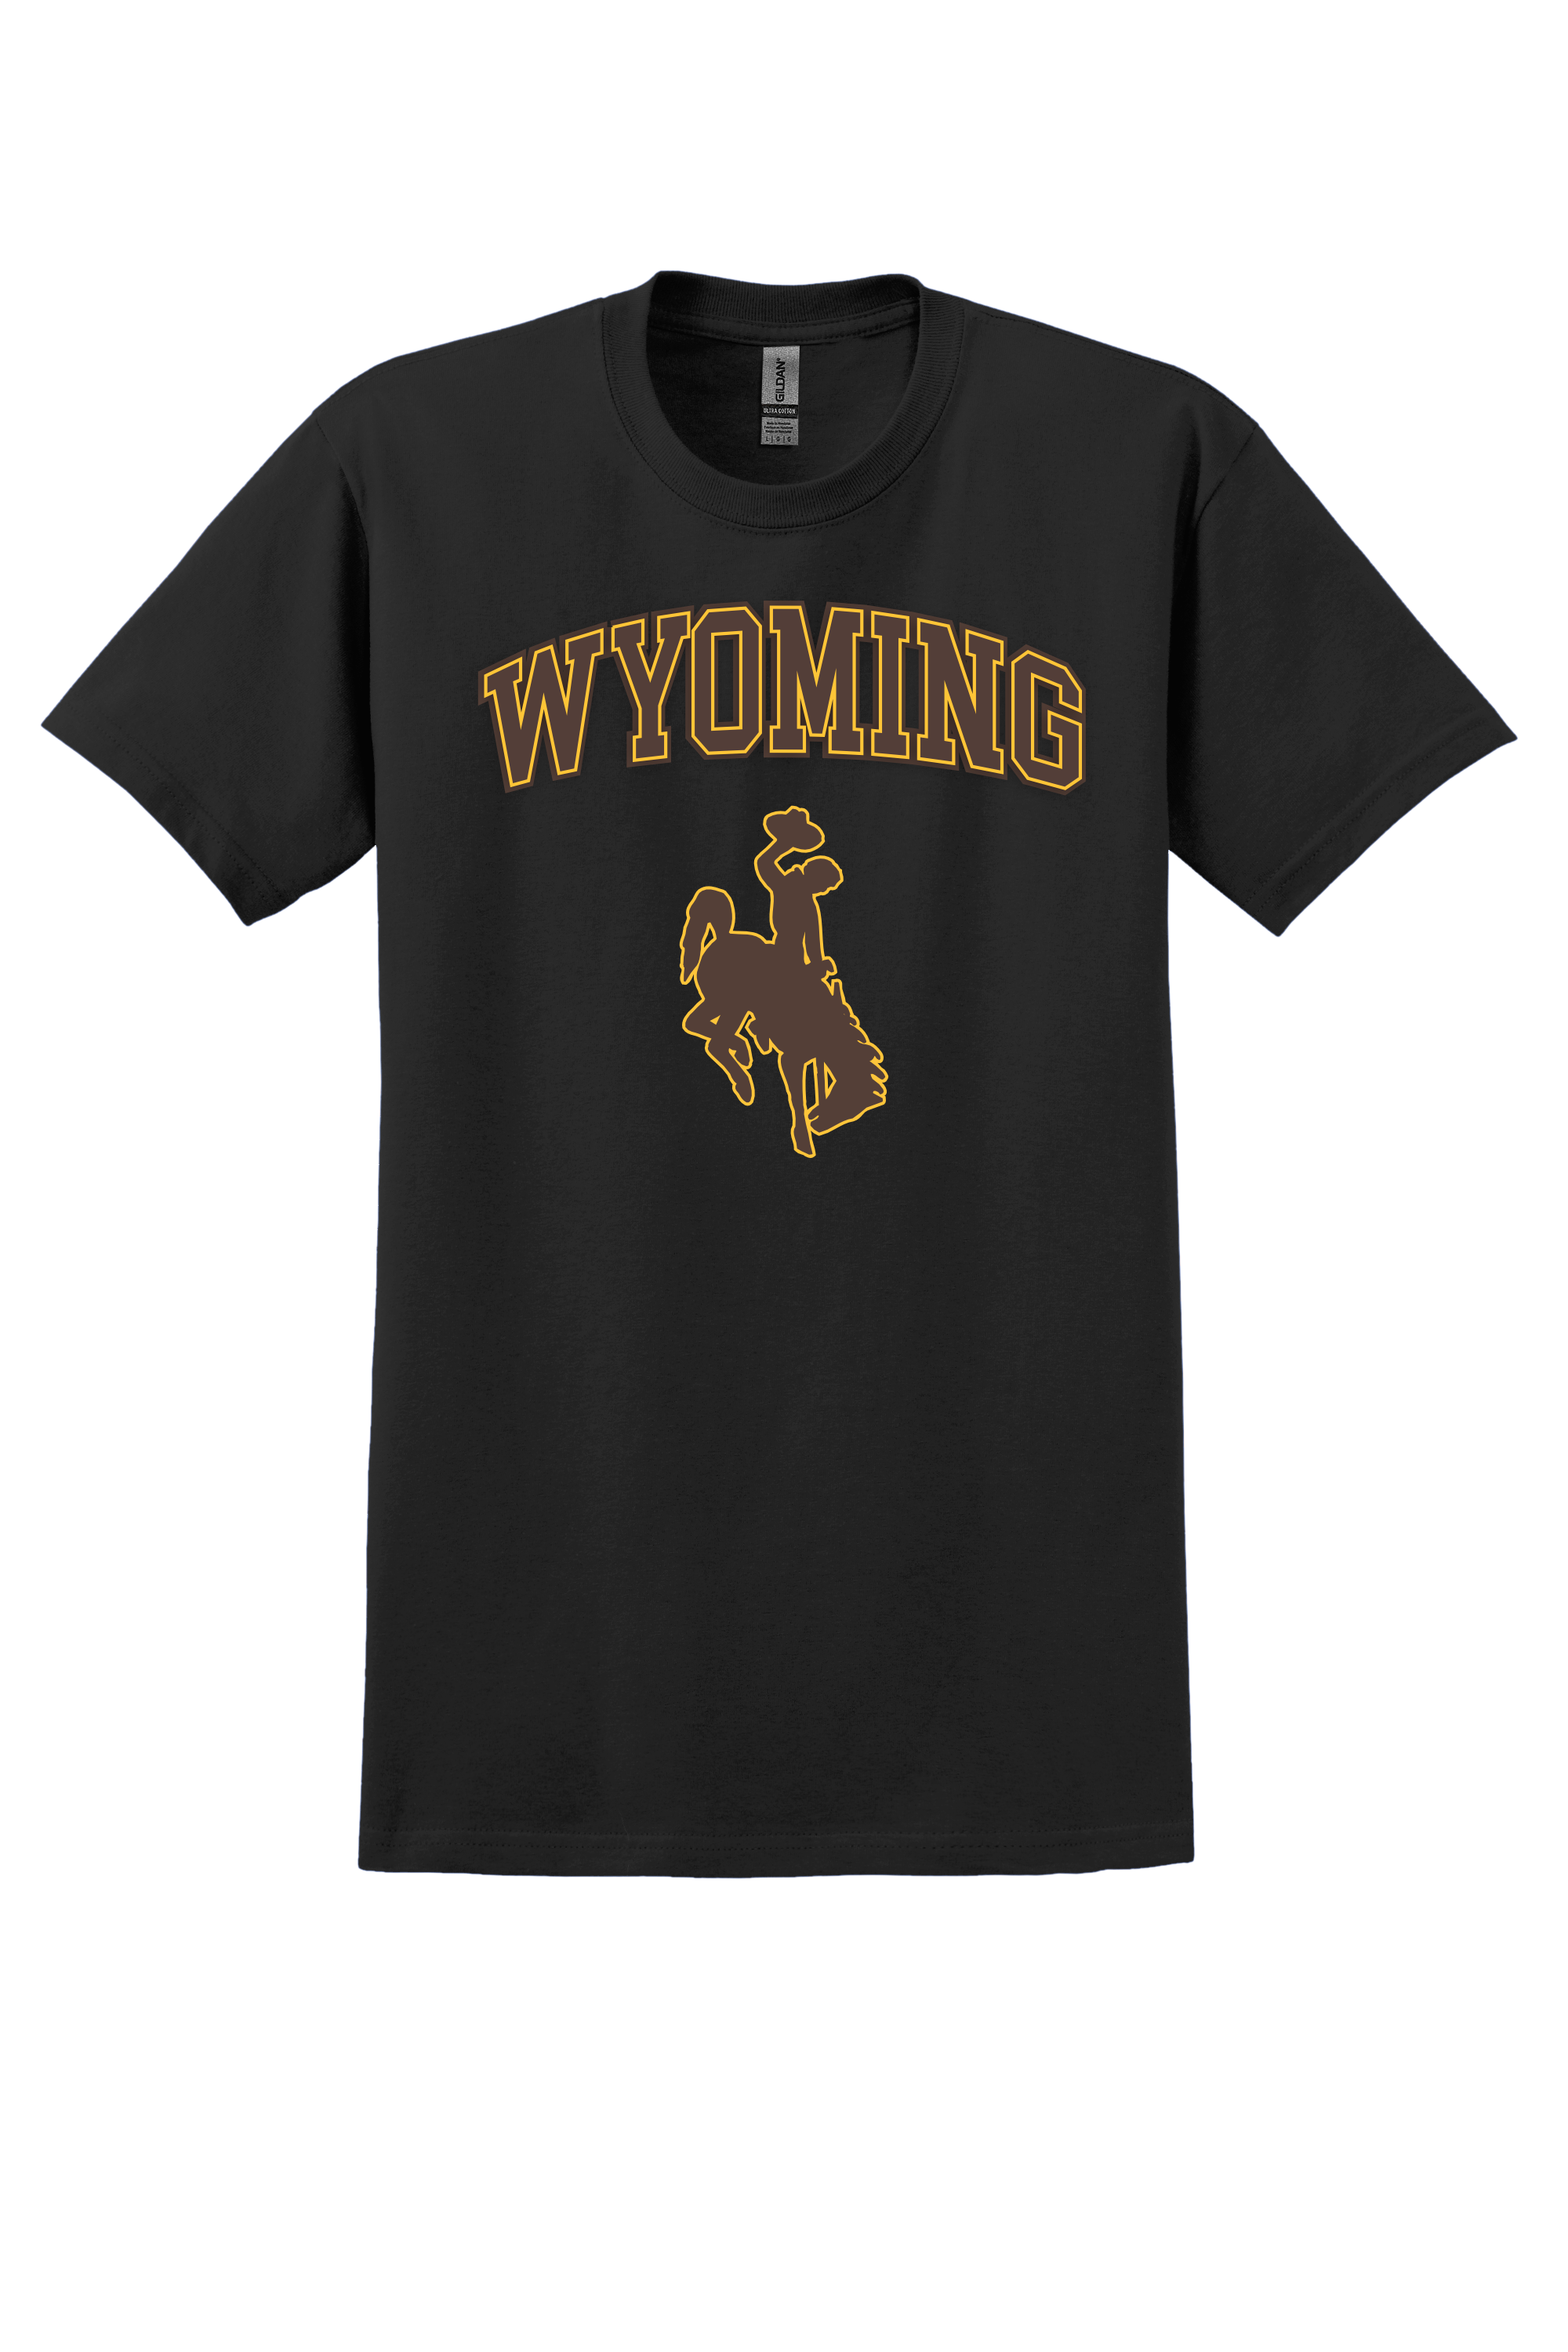  University of Wyoming T-shirt- Black